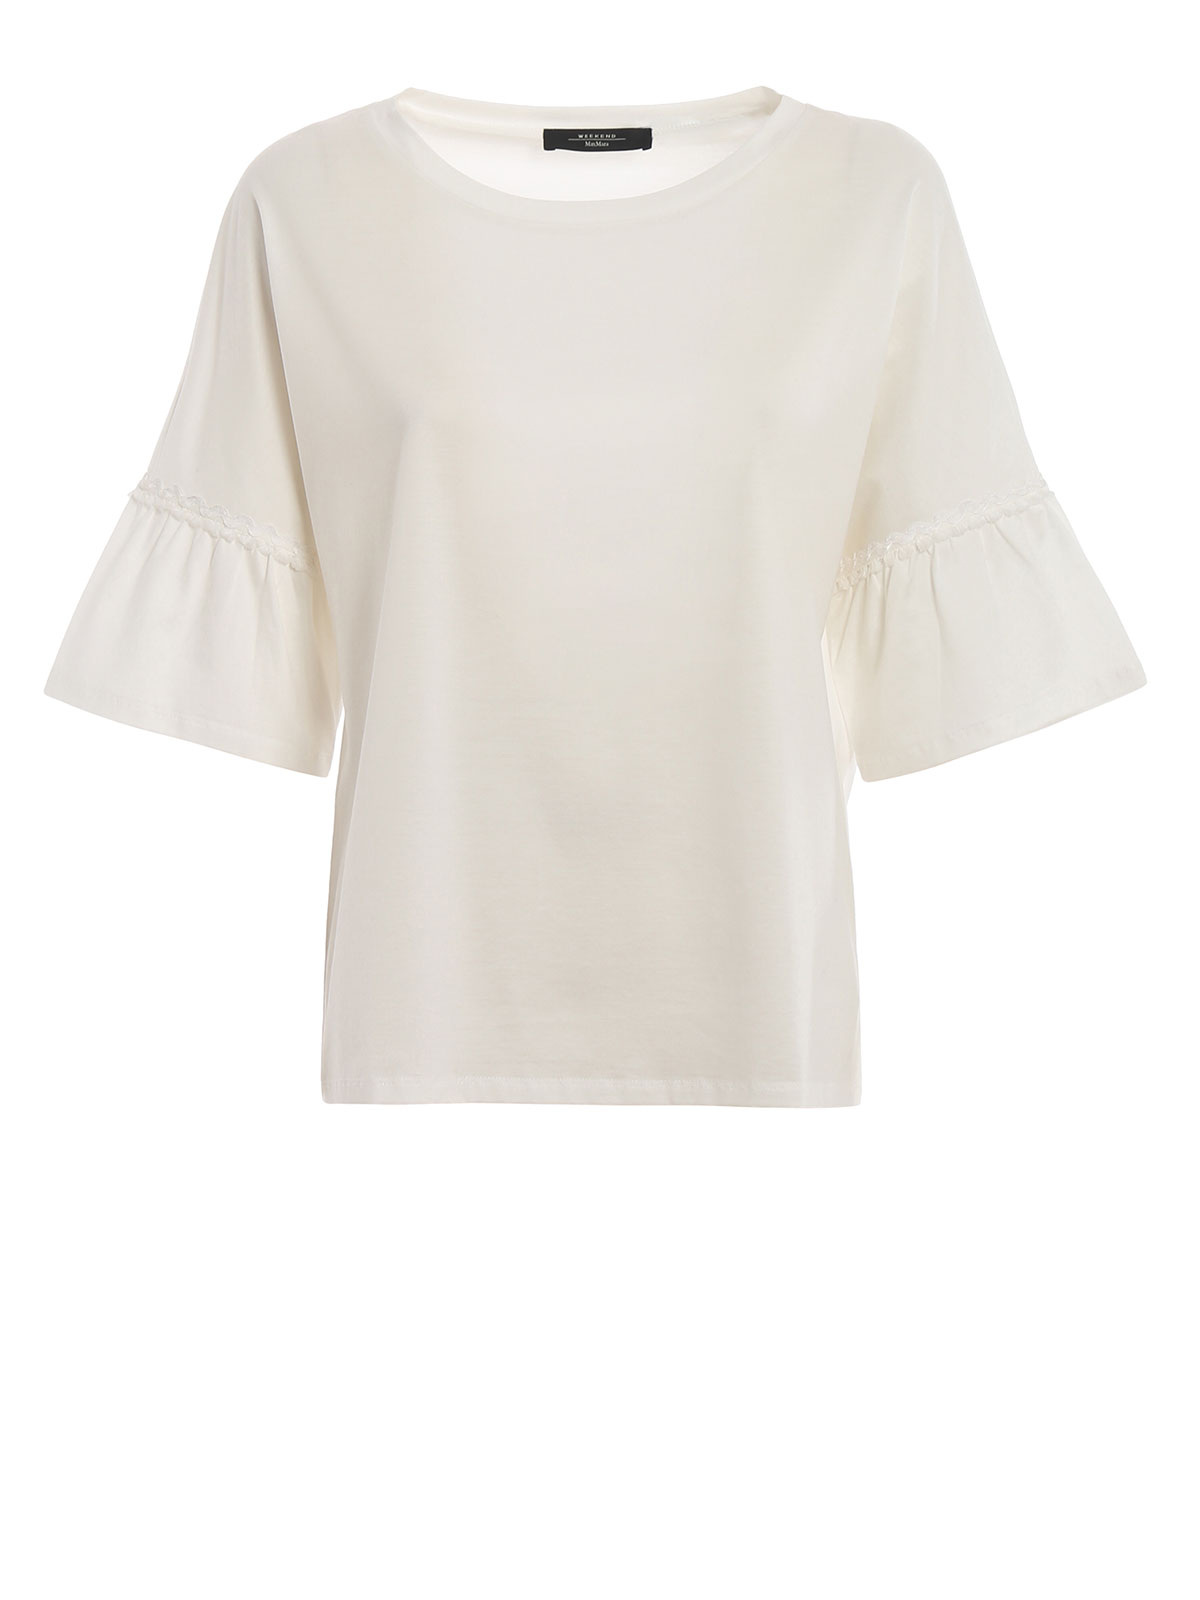 Blouses Weekend Max Mara - Calamai white cotton blouse - 594109916001